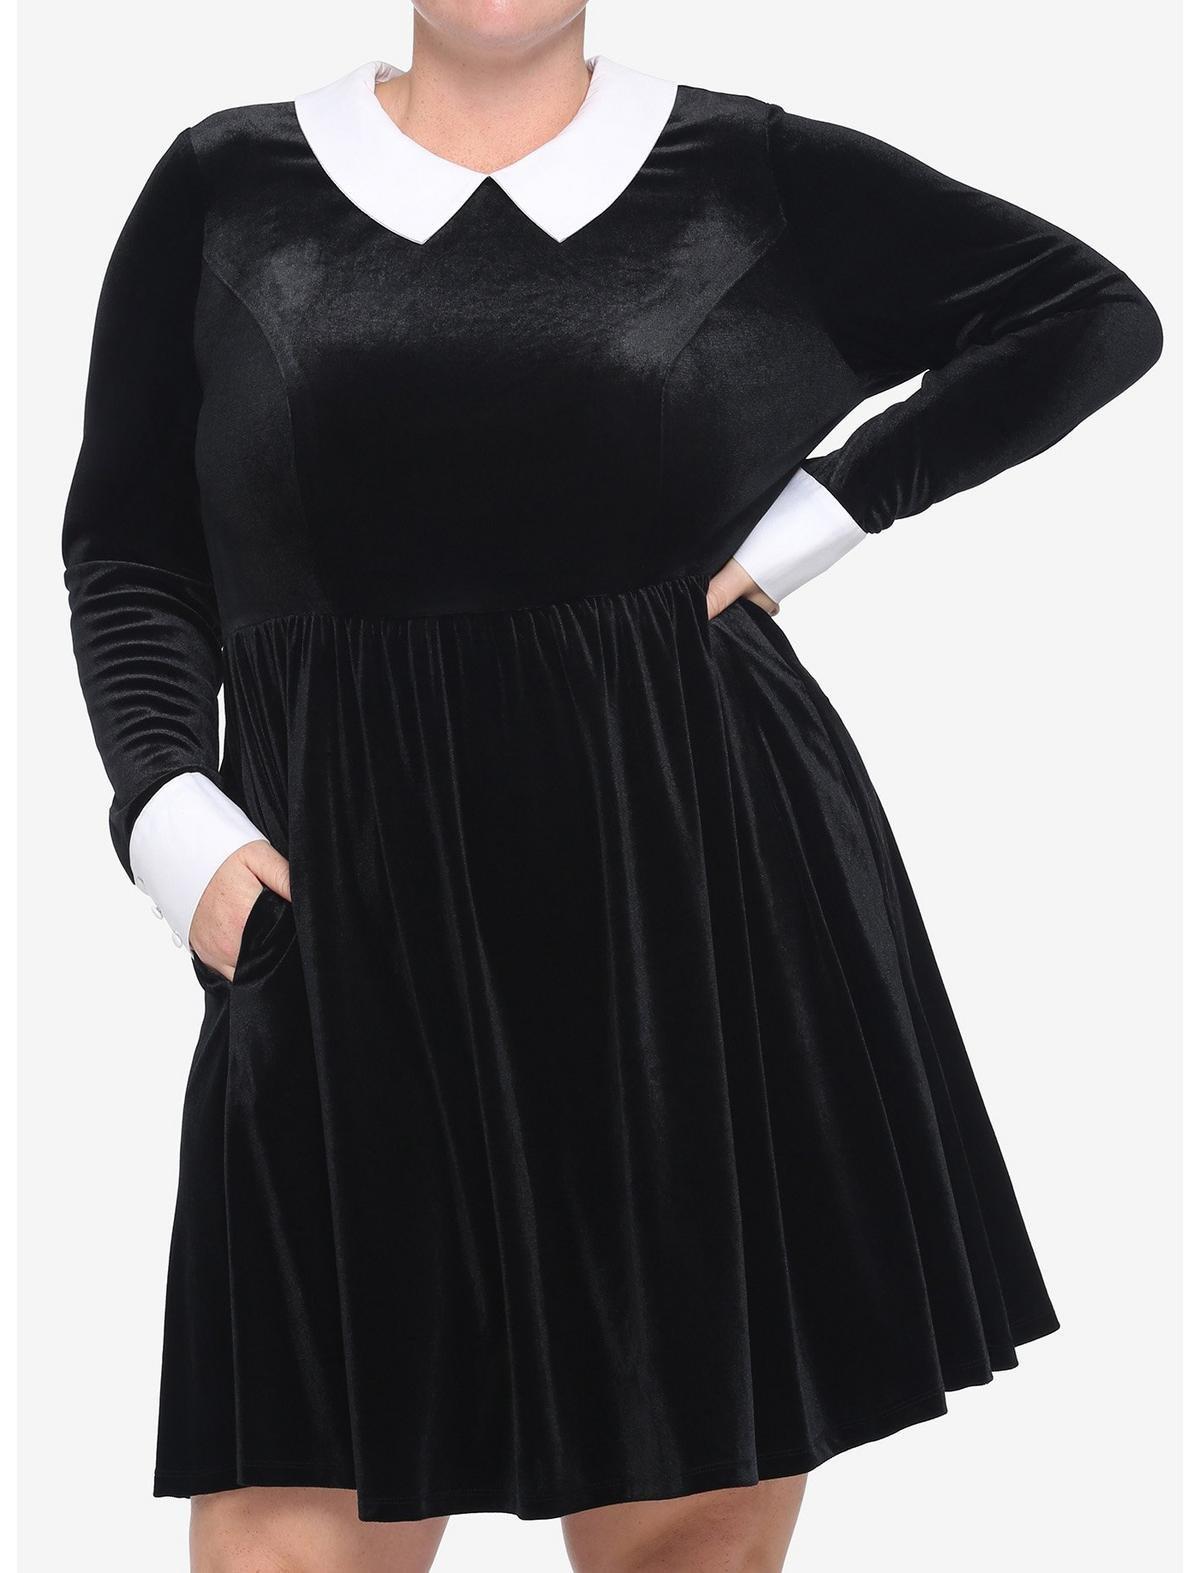 Dapper Day Outfit Ideas | Vintage Disney Dresses Black Velvet Cuffs  Collar Long-Sleeve Dress Plus Size $31.92 AT vintagedancer.com